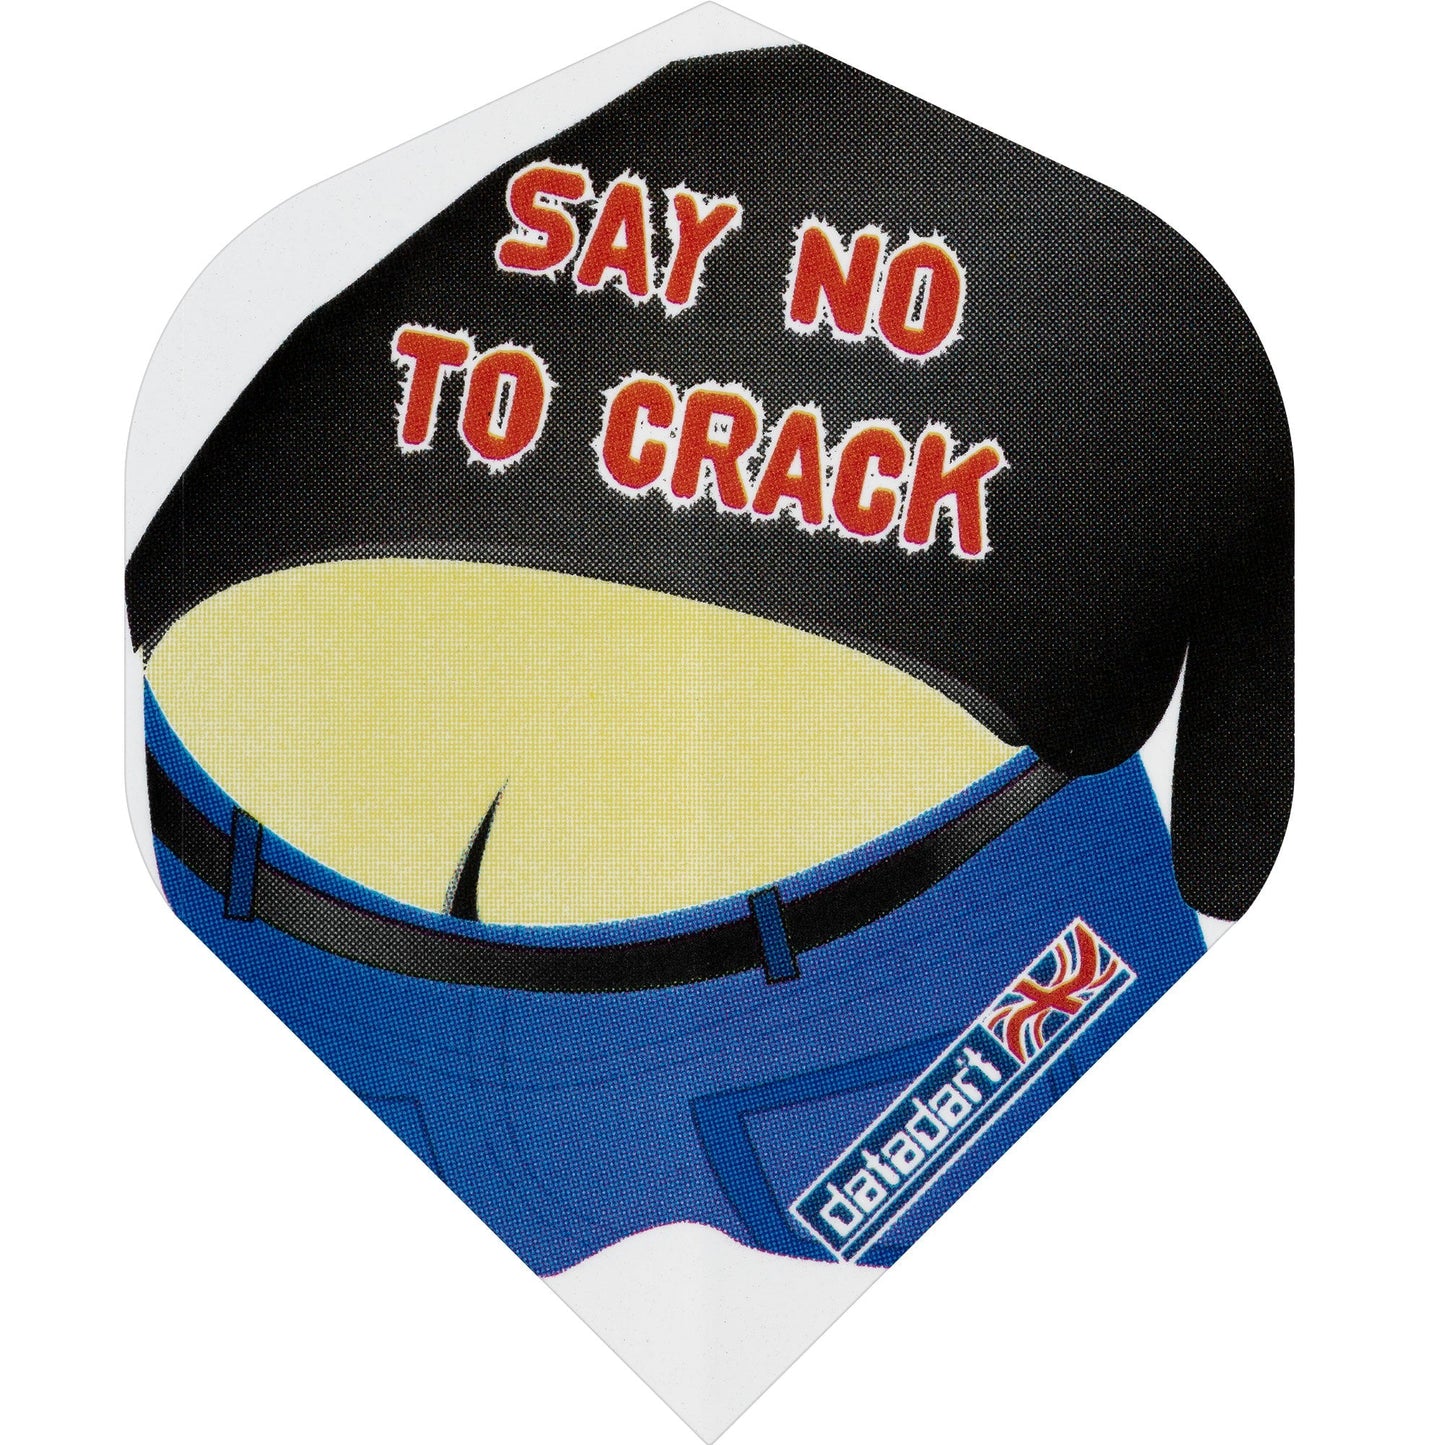 Datadart Metronic Dart Flights - No2 - Std - Say No To Crack